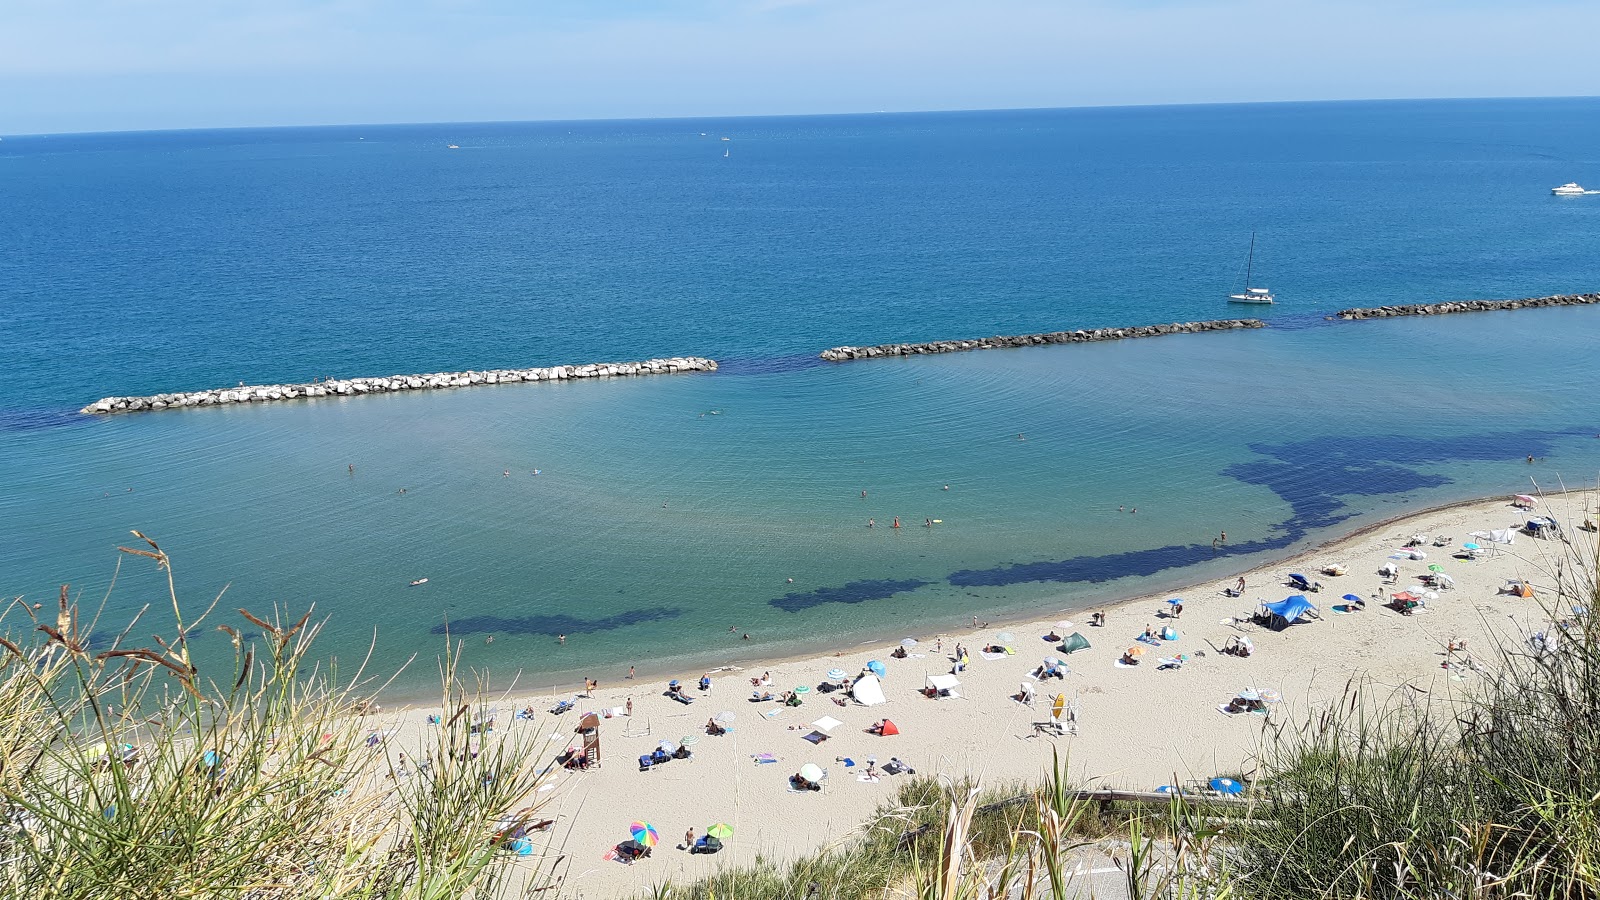 Photo de Spiaggia di Fiorenzuola di Focara situé dans une zone naturelle